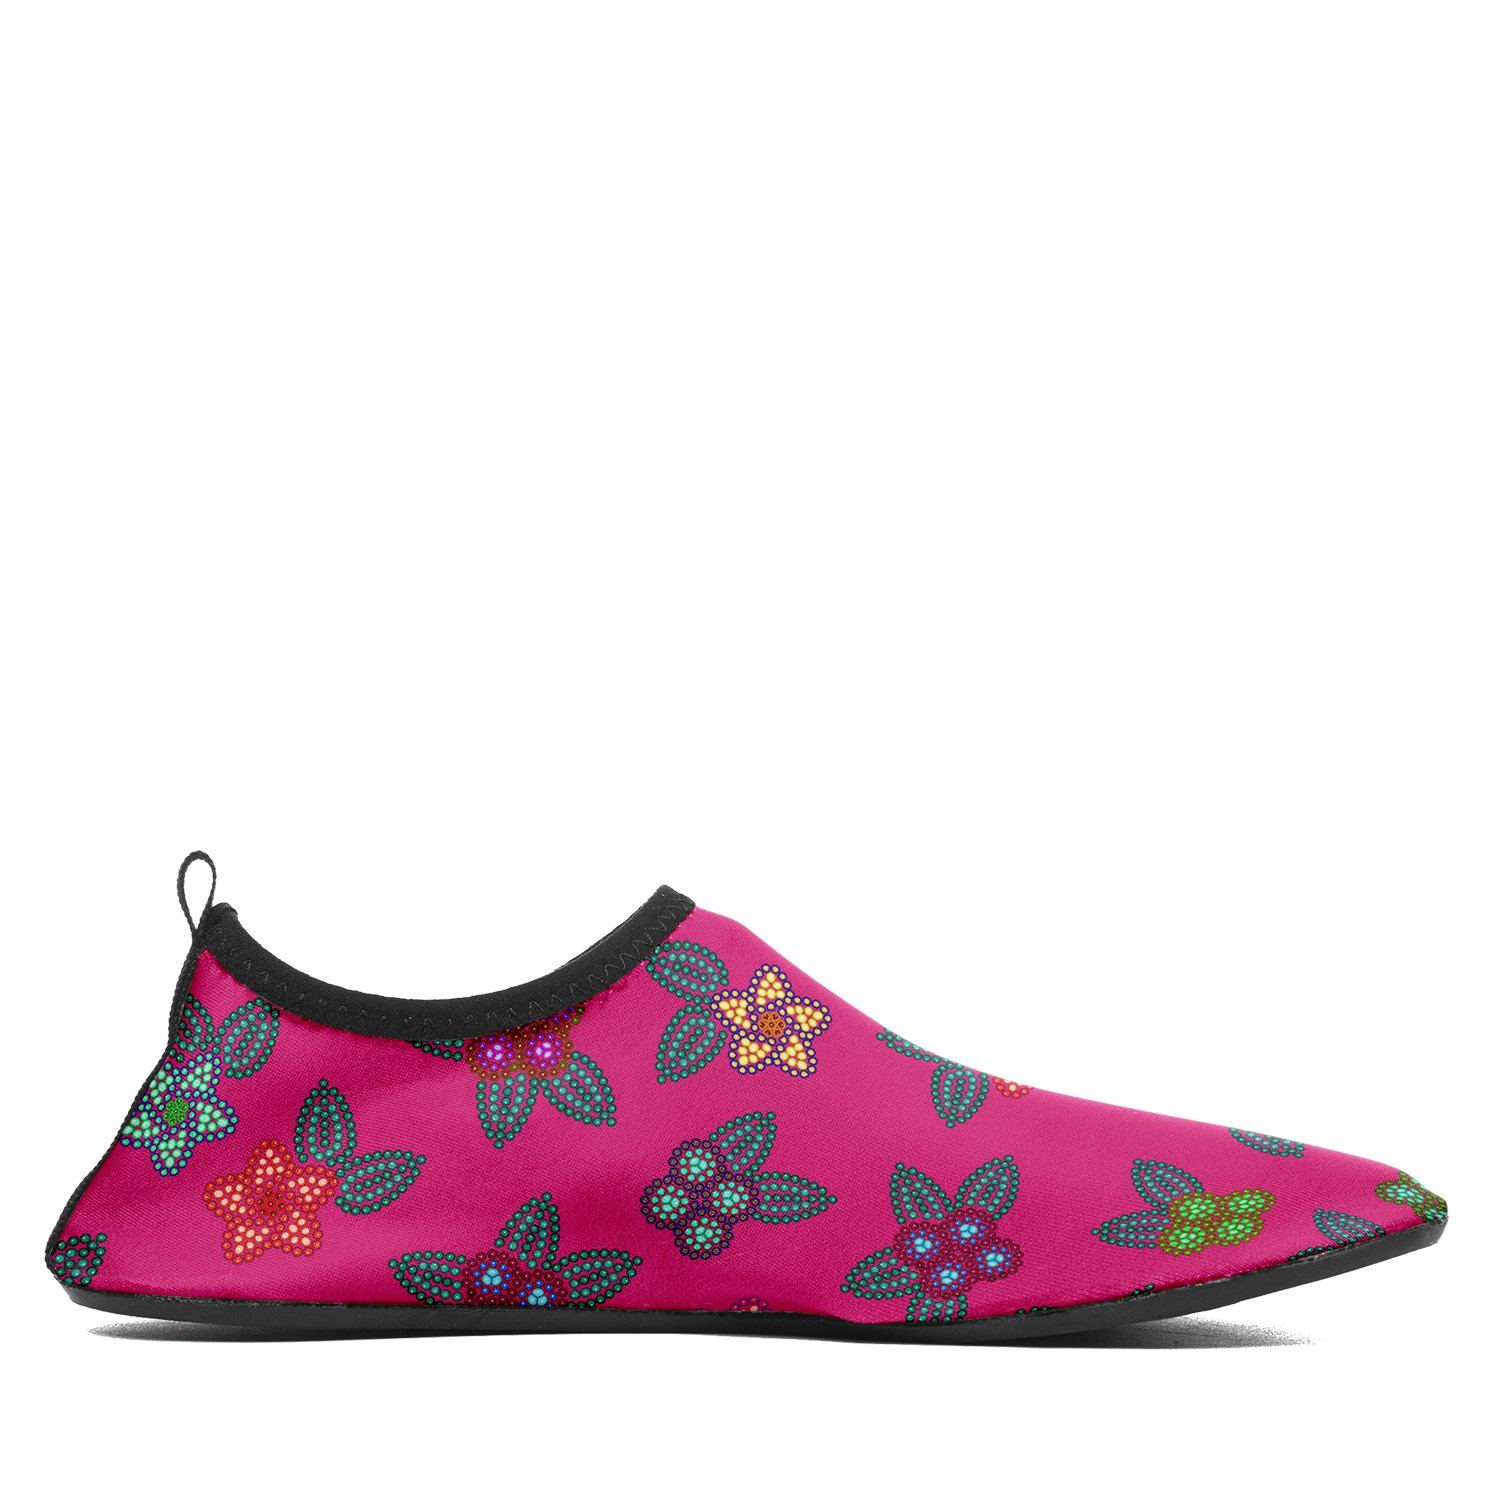 Berry Flowers Sockamoccs Slip On Shoes Herman 